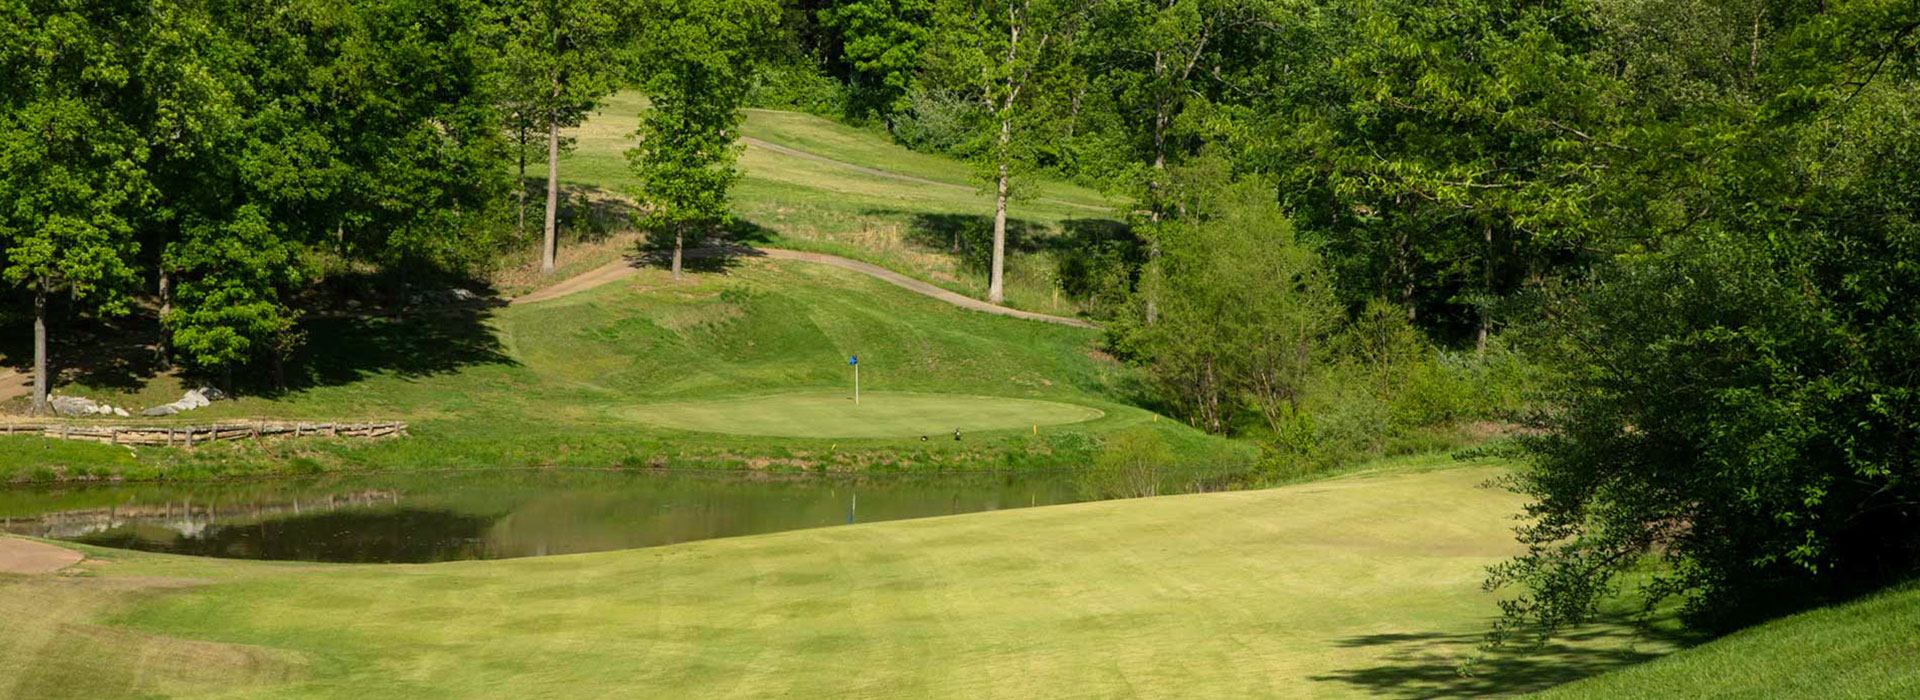 Eagle Backyard Golf Practice Net